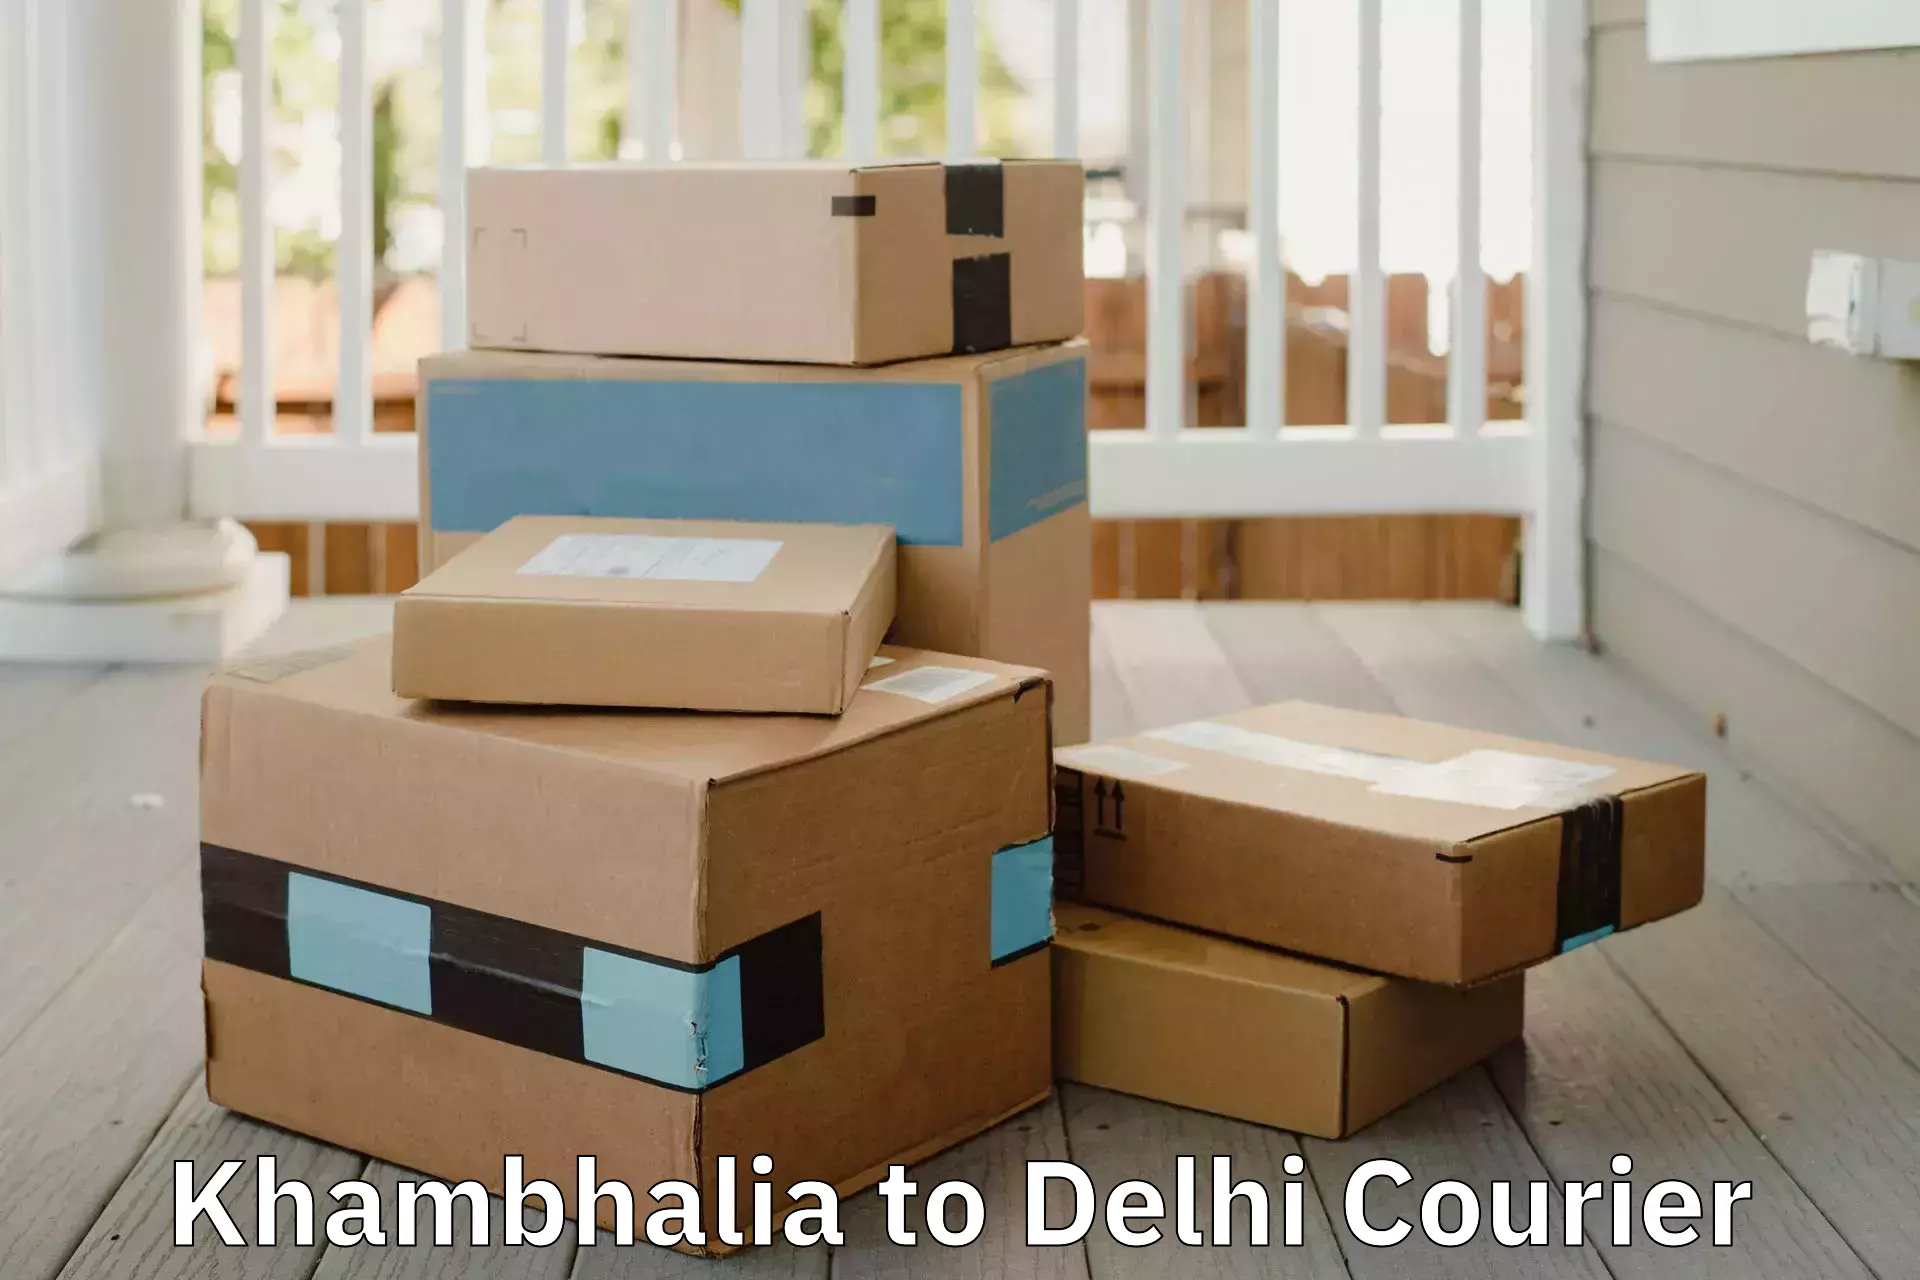 Professional moving company Khambhalia to Delhi